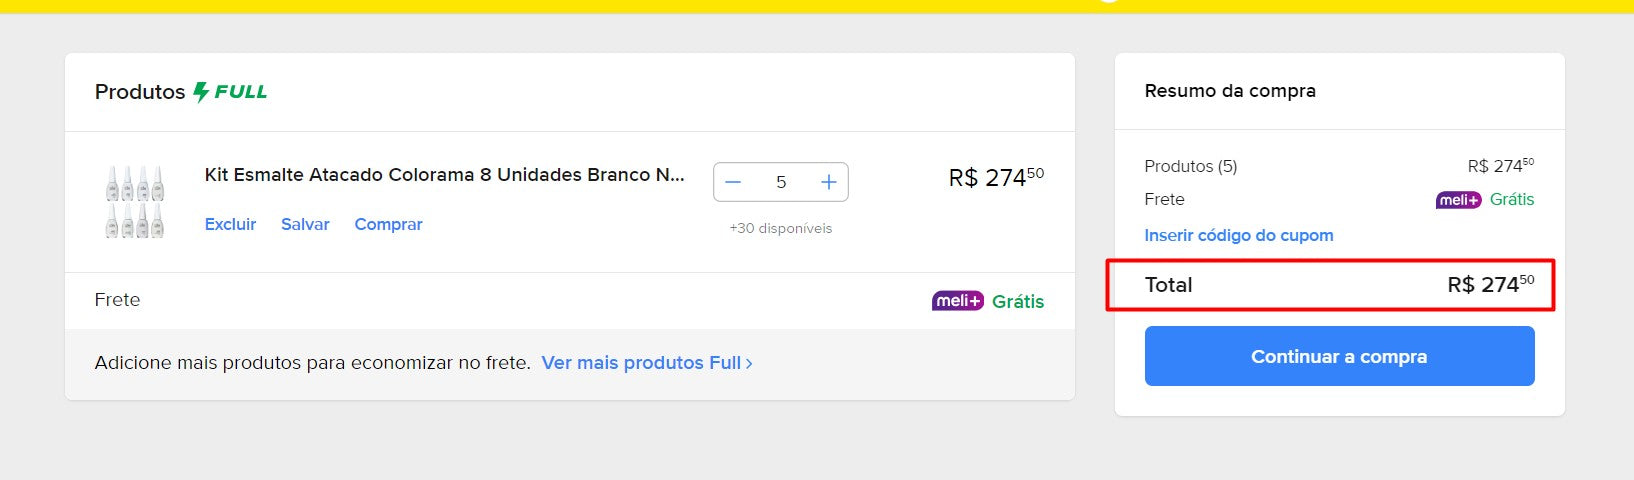 Comprador personal | Comprar en Brasil - Kits para Manicura - 9 kits - DDP